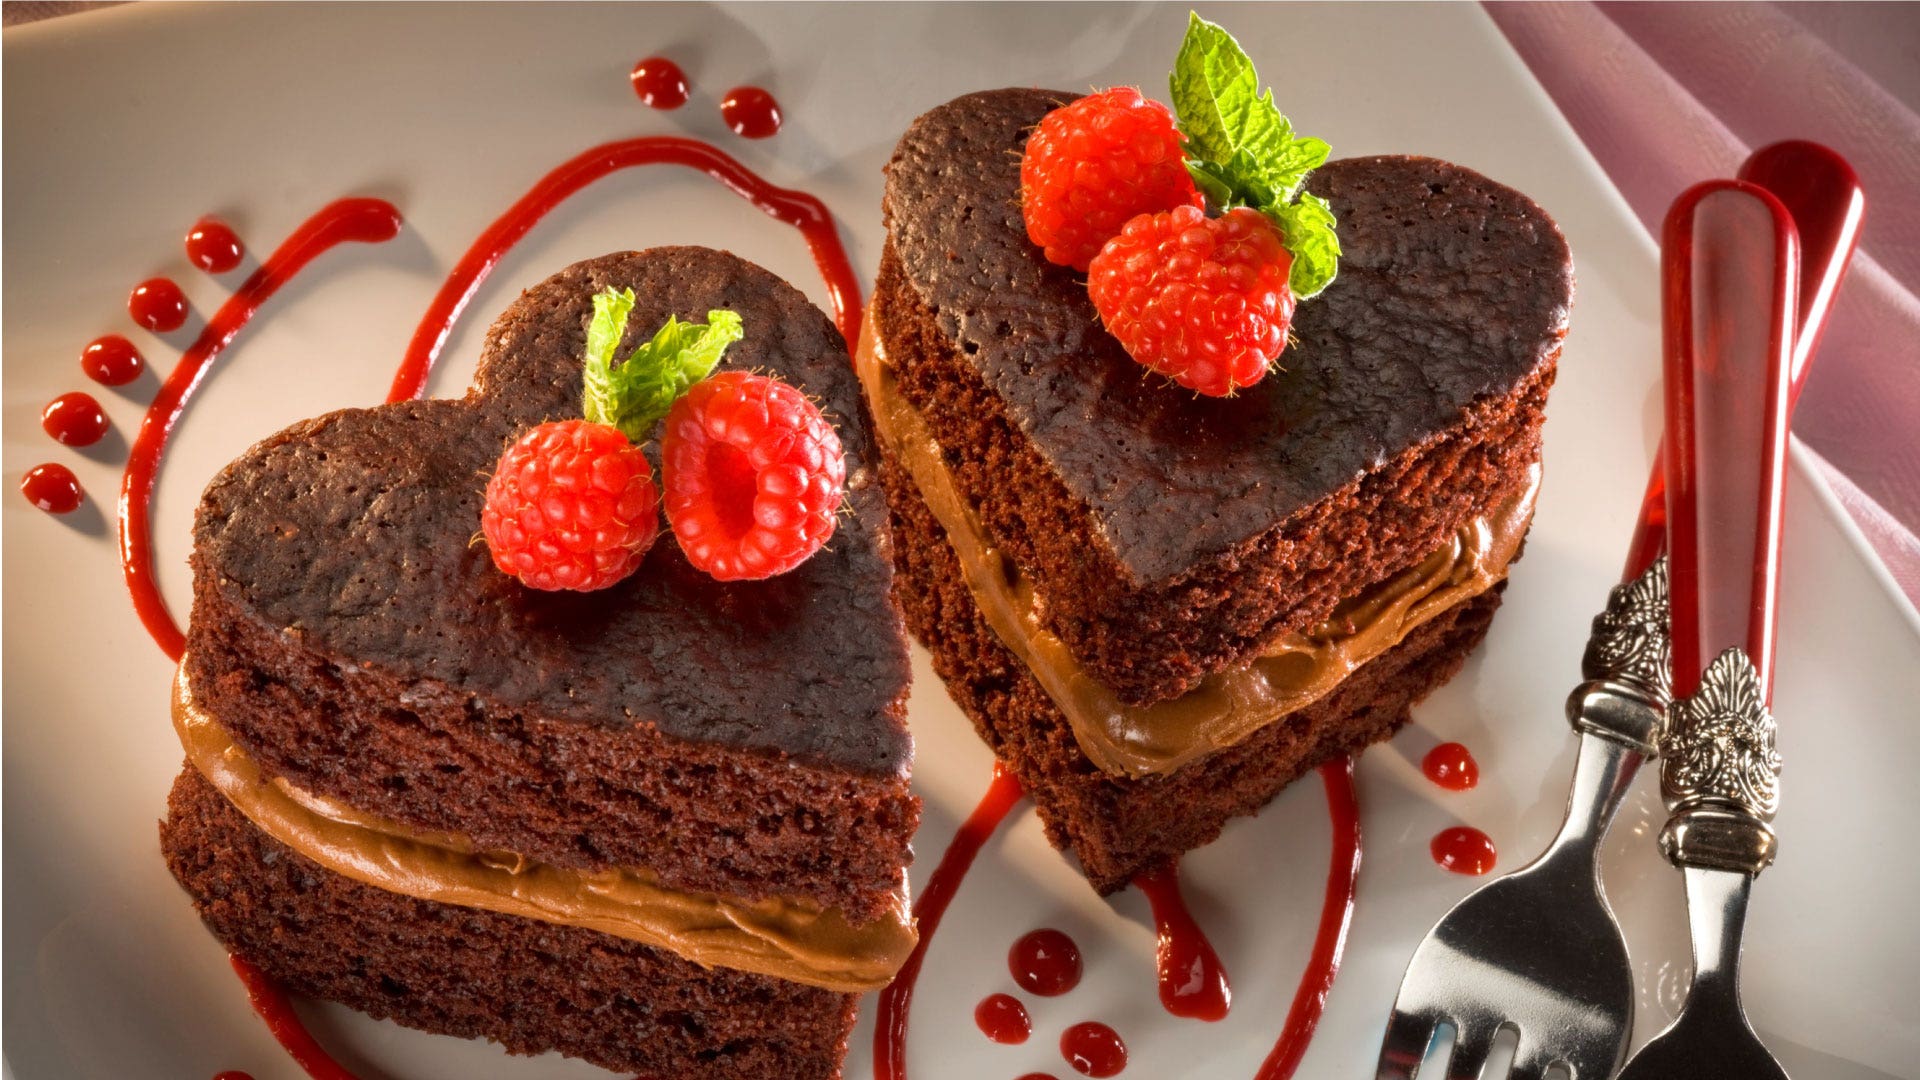 beautiful chocolate heart cake